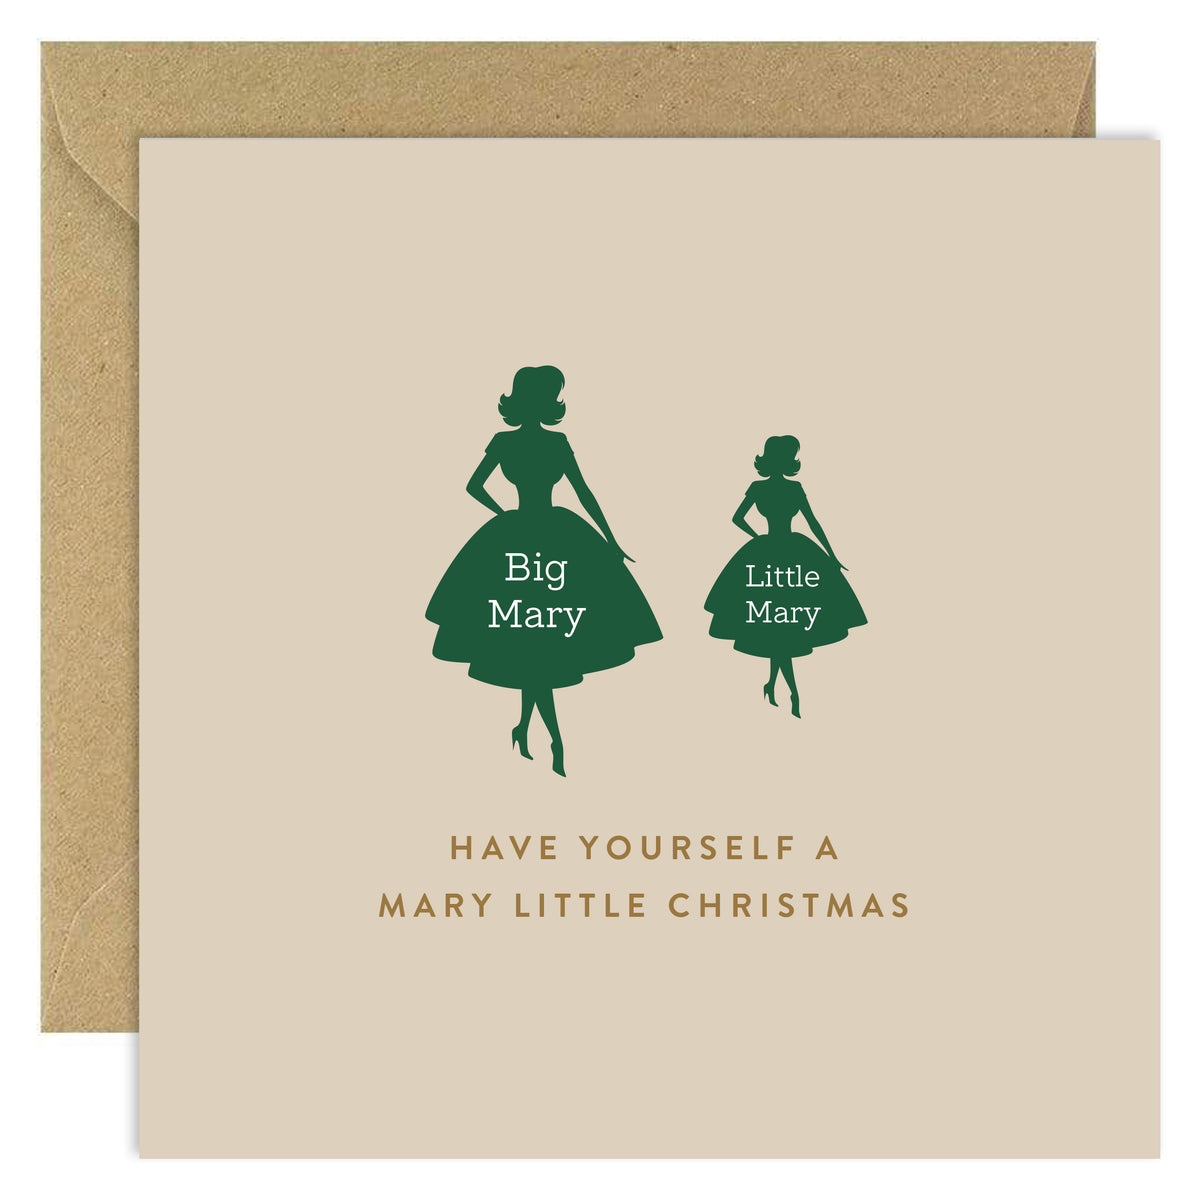 Mary Little Christmas